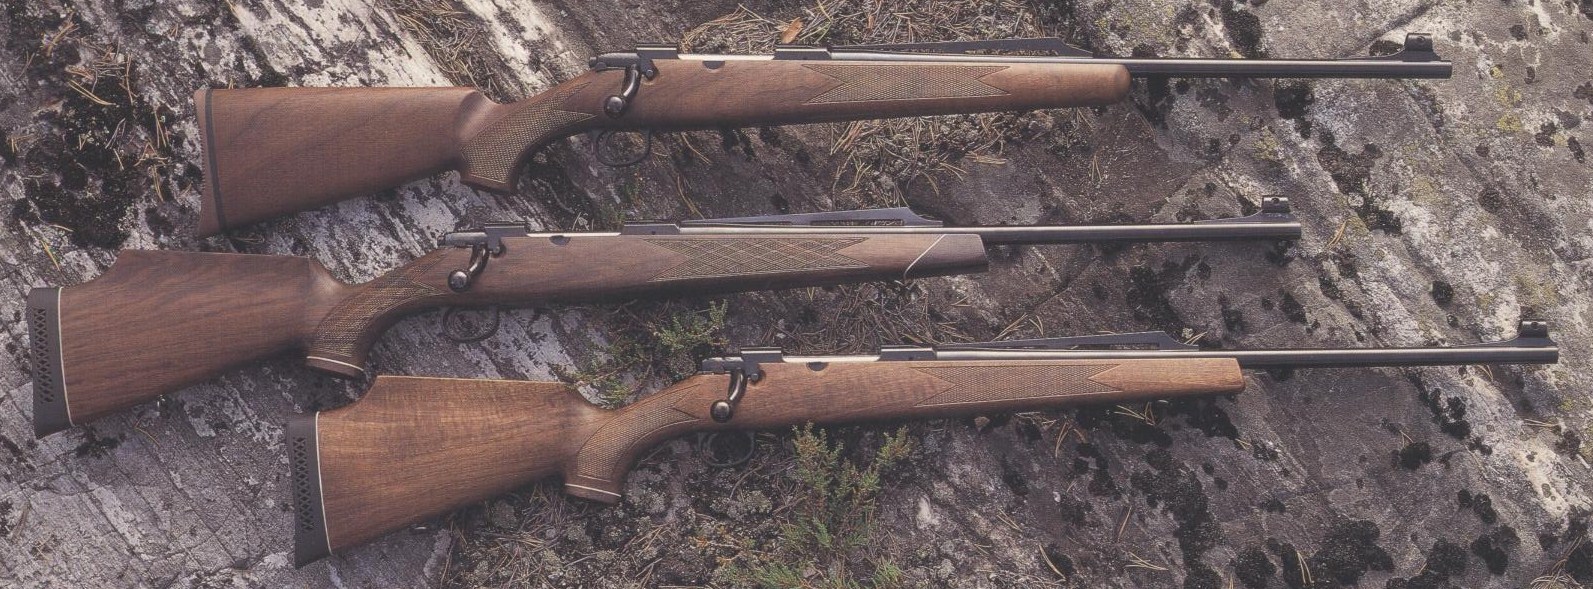 ./guns/rifle/bilder/Rifle-Kongsberg-Lakelander-389-Battue-1.JPG